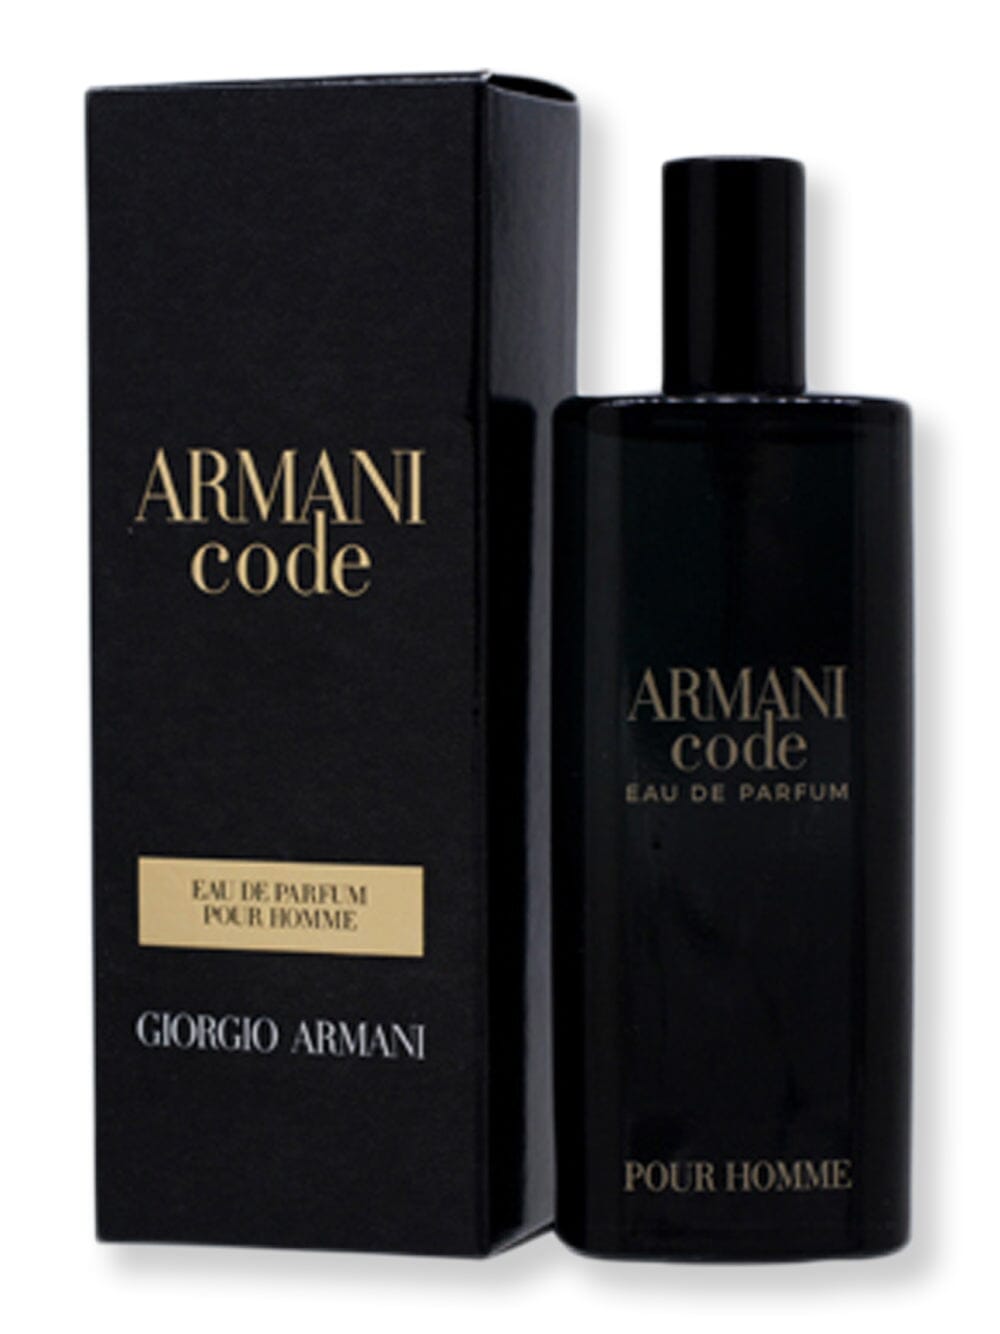 GIORGIO ARMANI GIORGIO ARMANI Armani Code Pour Homme EDP Spray 0.5 oz15 ml Perfume 